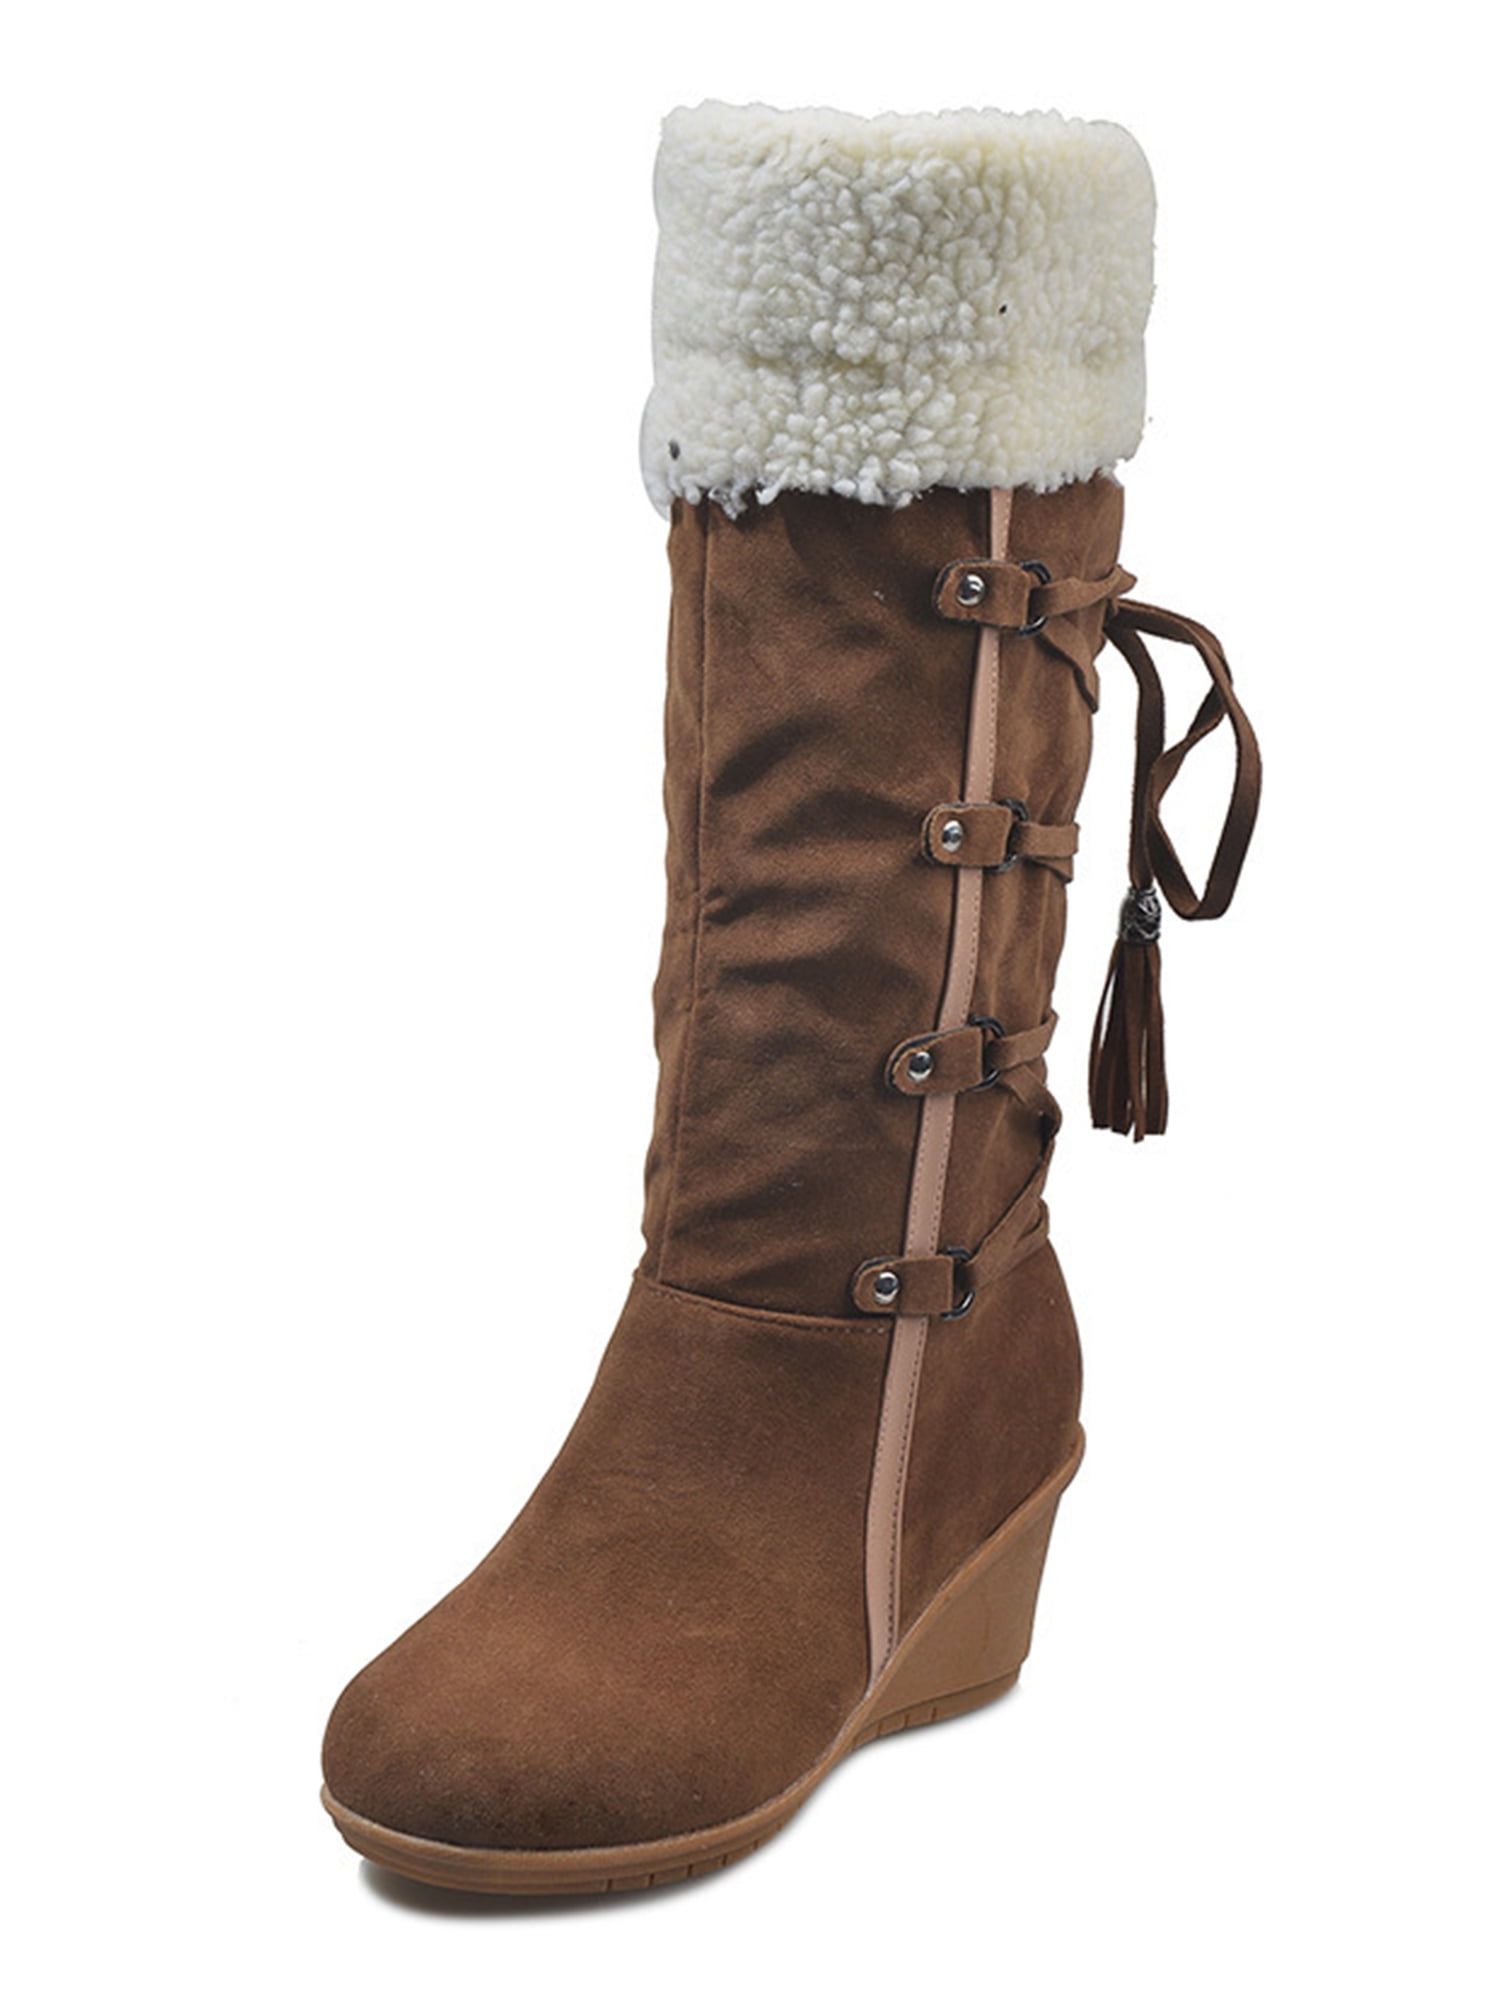 2017 Winter Women Warm Fur Flats Mid Calf Boot Girl Suede Lace Up Platform Shoes 